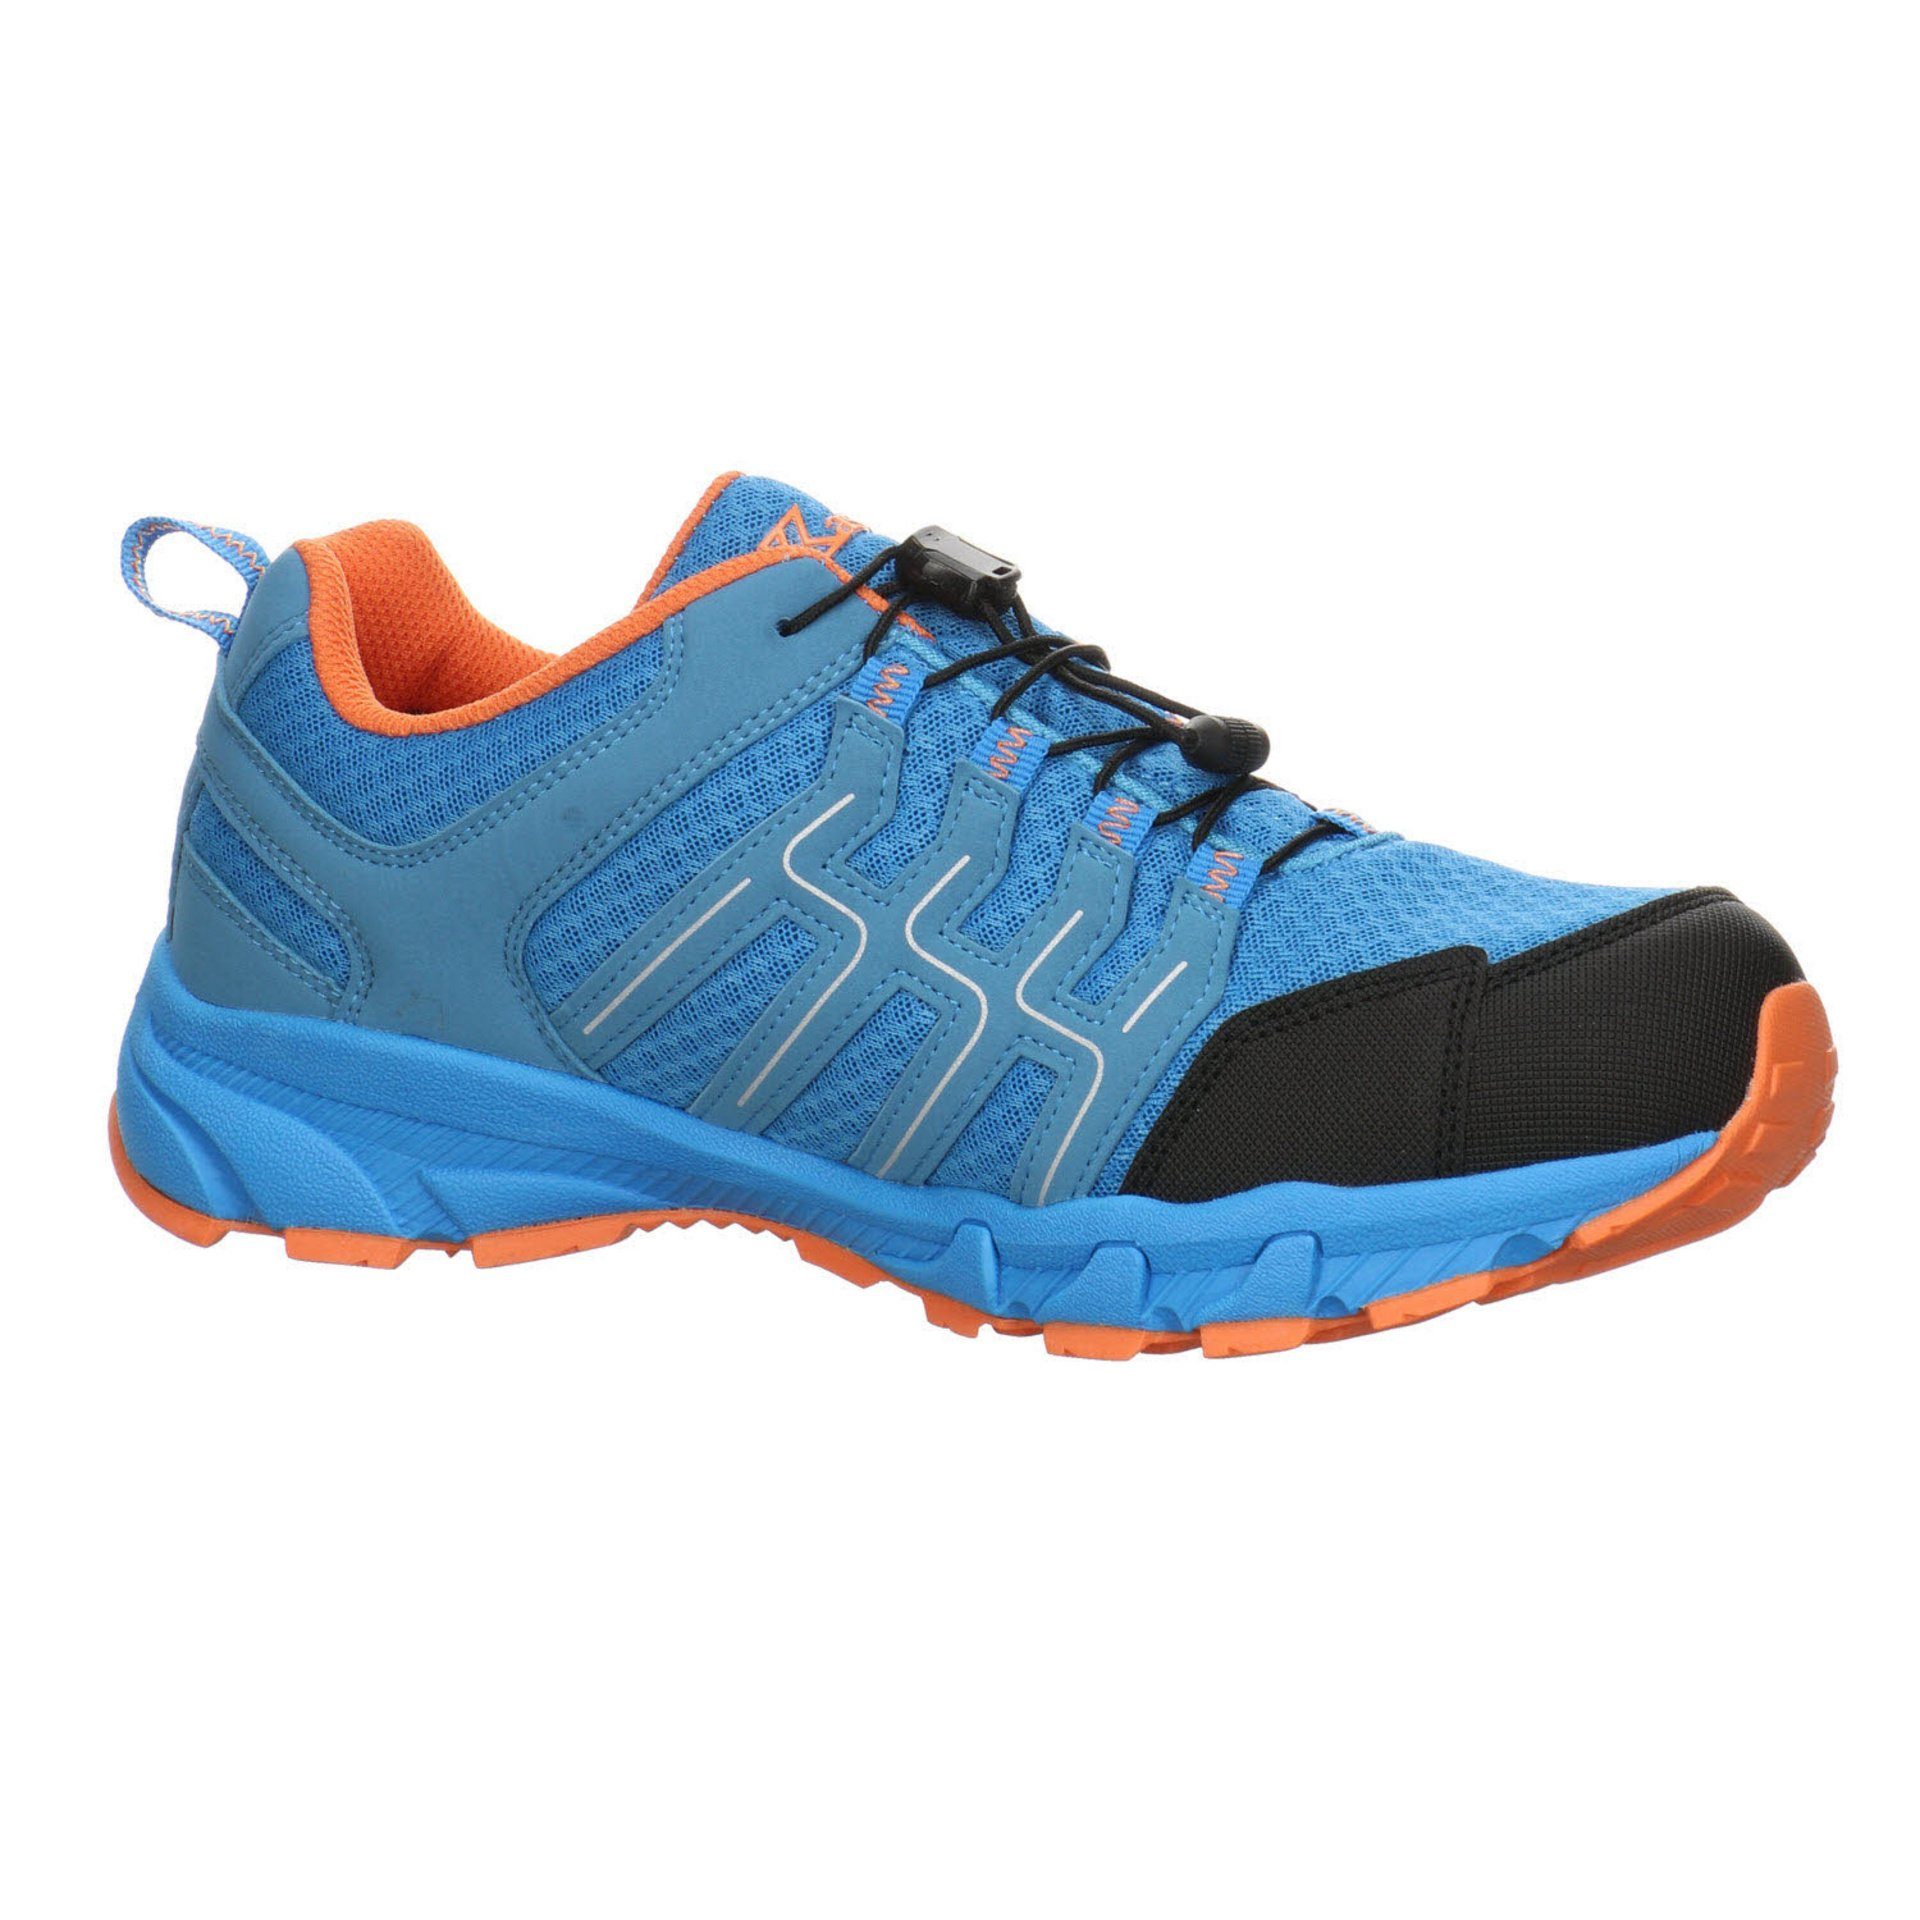 Kastinger Damen Schuhe Outdoor Trailrunner blue/orange Outdoorschuh Outdoorschuh Synthetikkombination